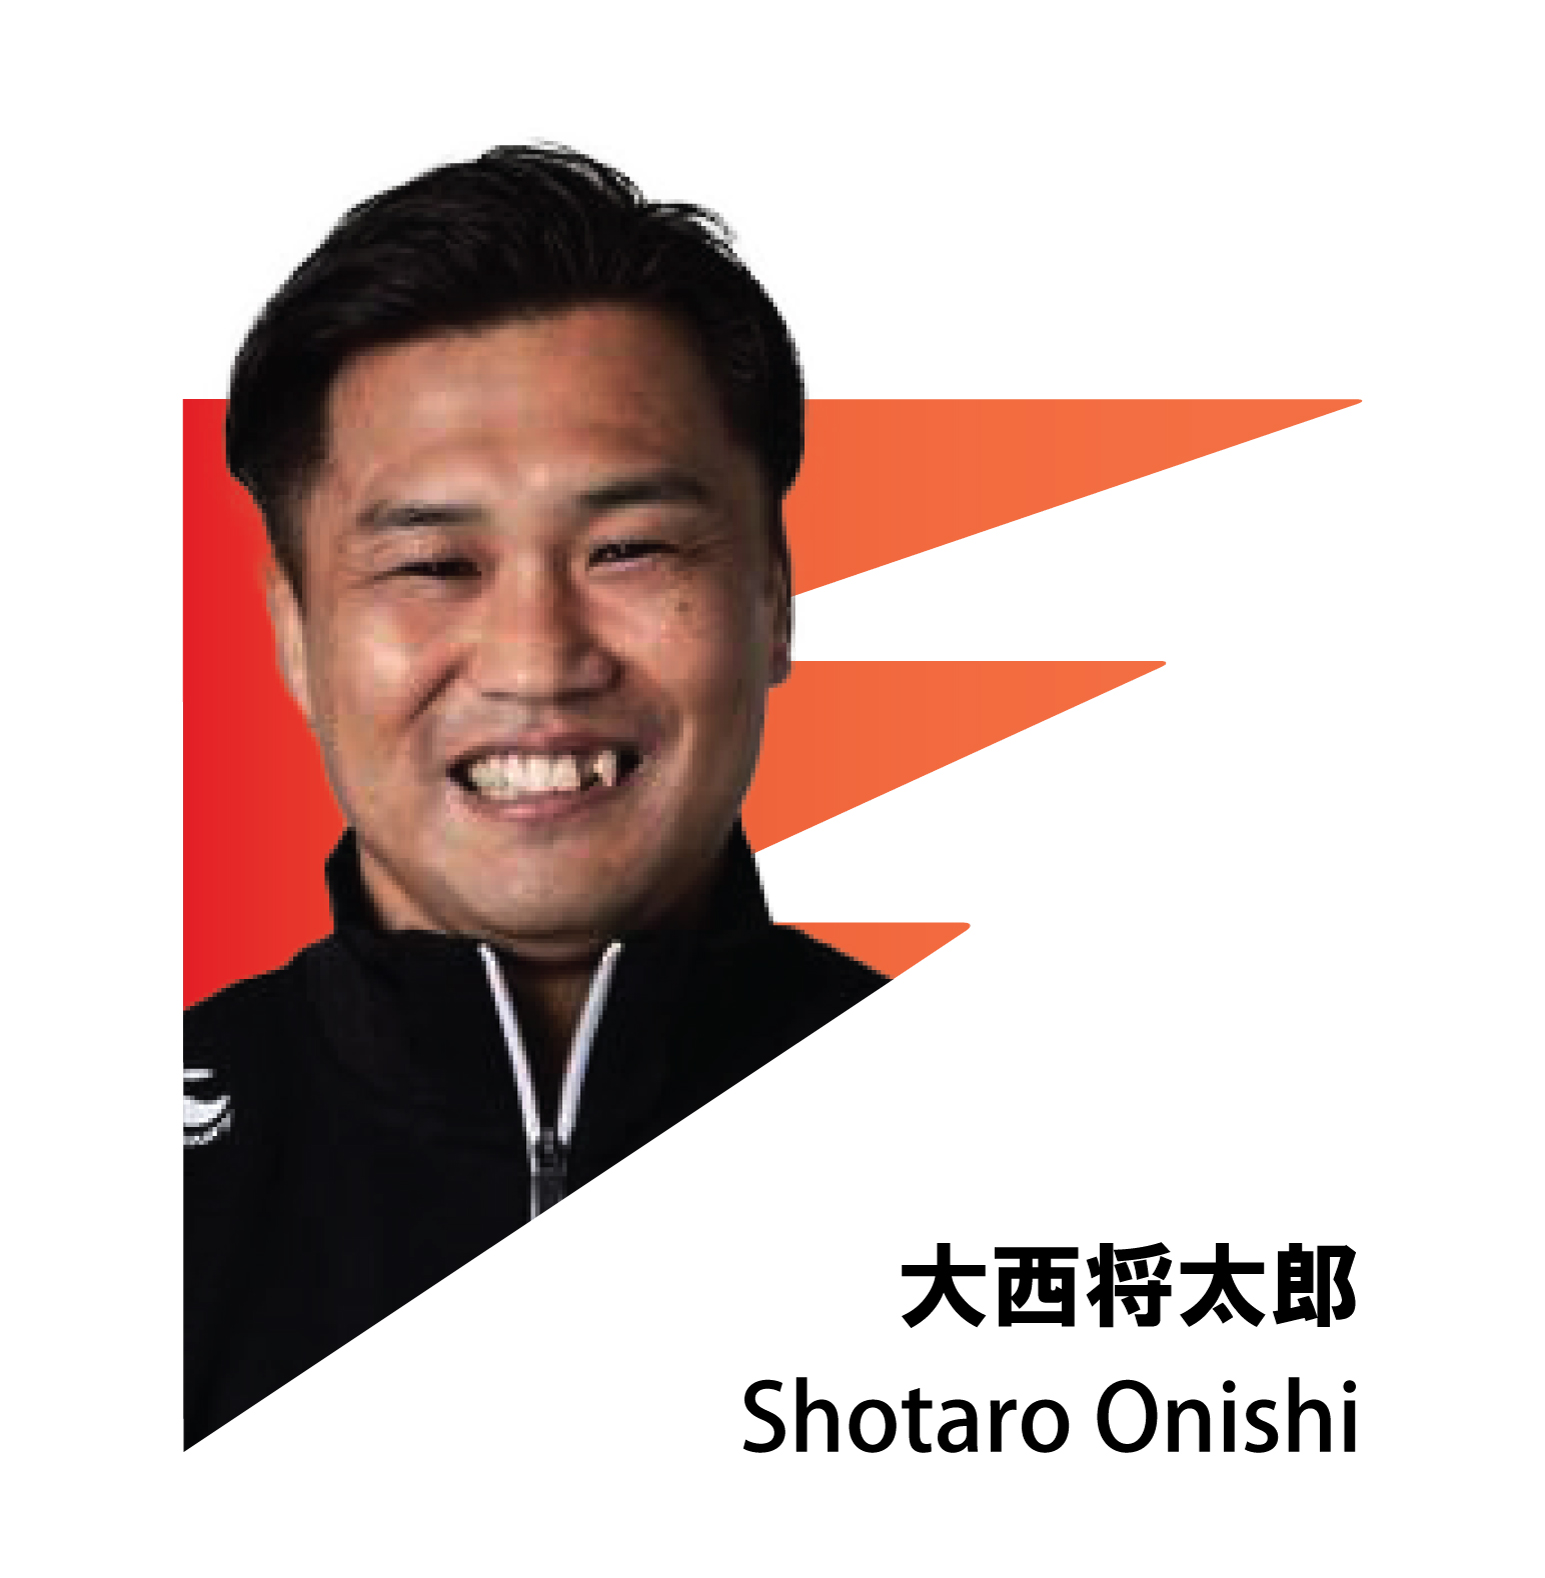 SHOTARO ONISHI